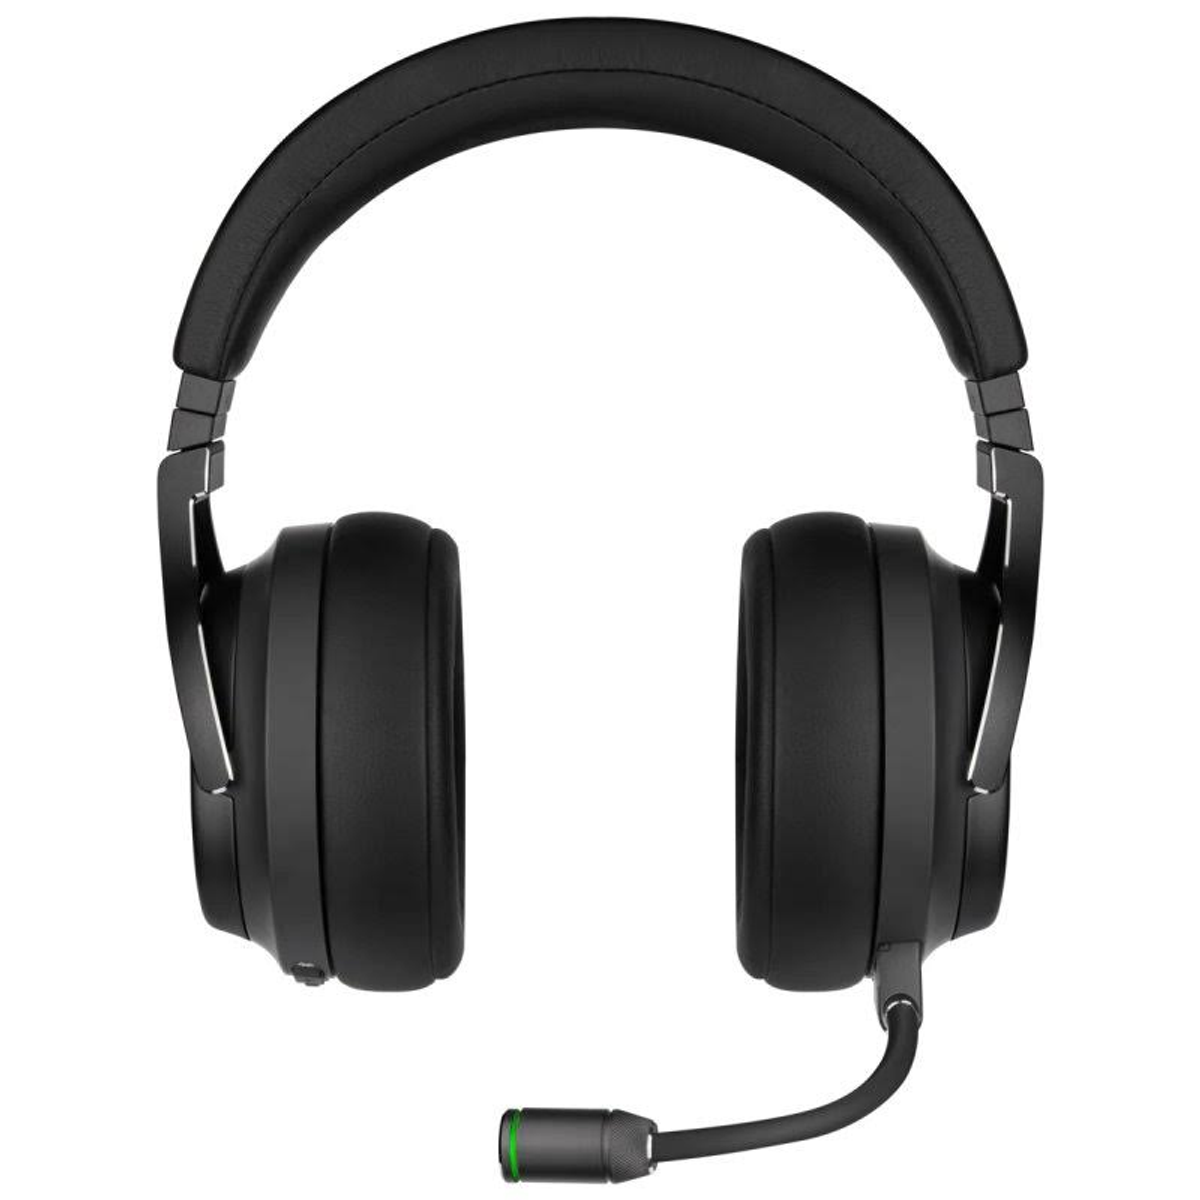 CORSAIR CA-9011188-EU VIRTUOSO Schwarz Bluetooth Headset On-ear RGB XT, WIRELESS